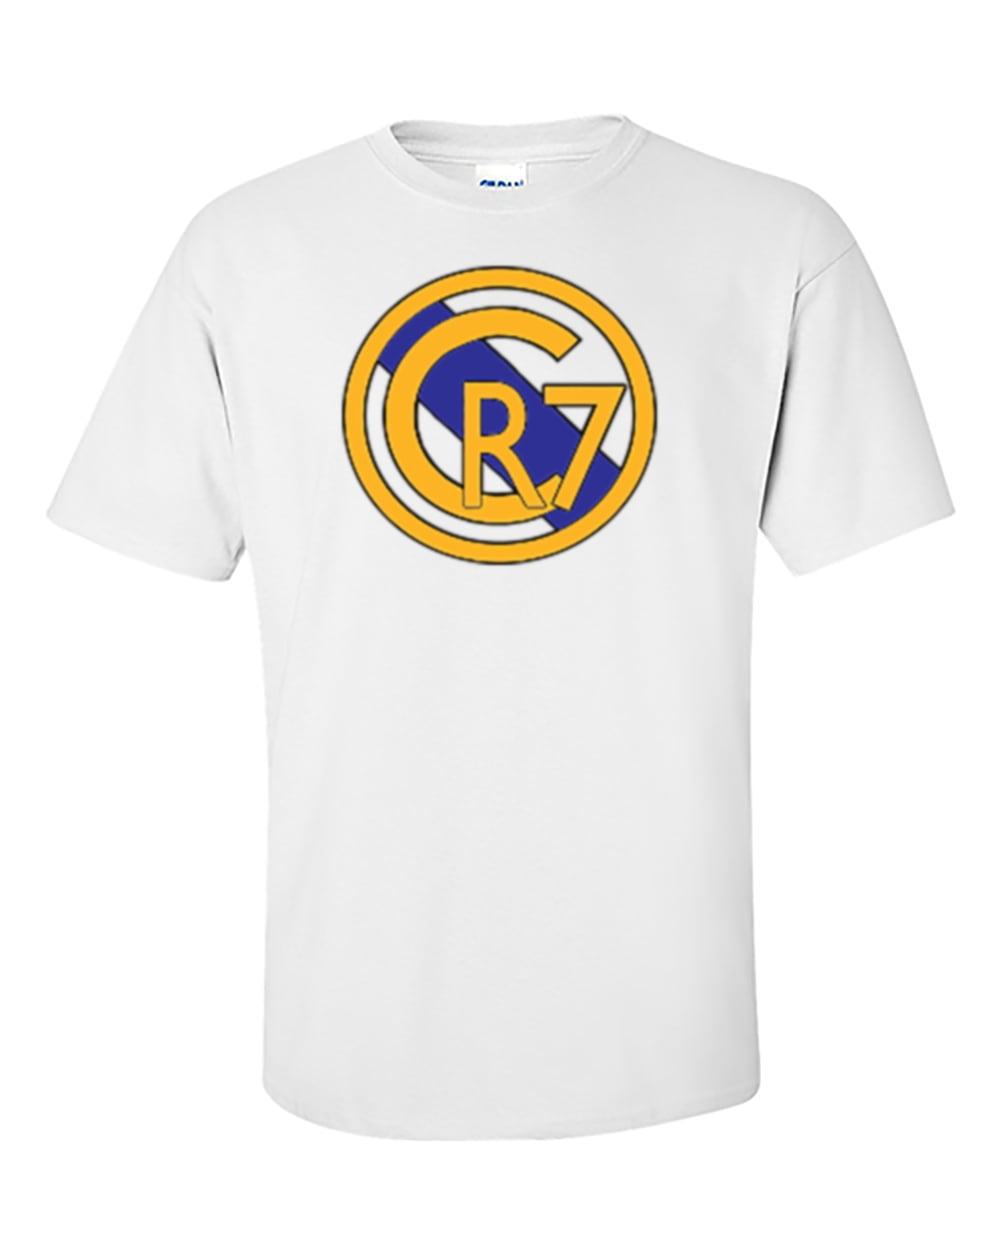 Cristiano Ronaldo Madrid "CR7" Youth X-Large T-Shirt - Walmart.com